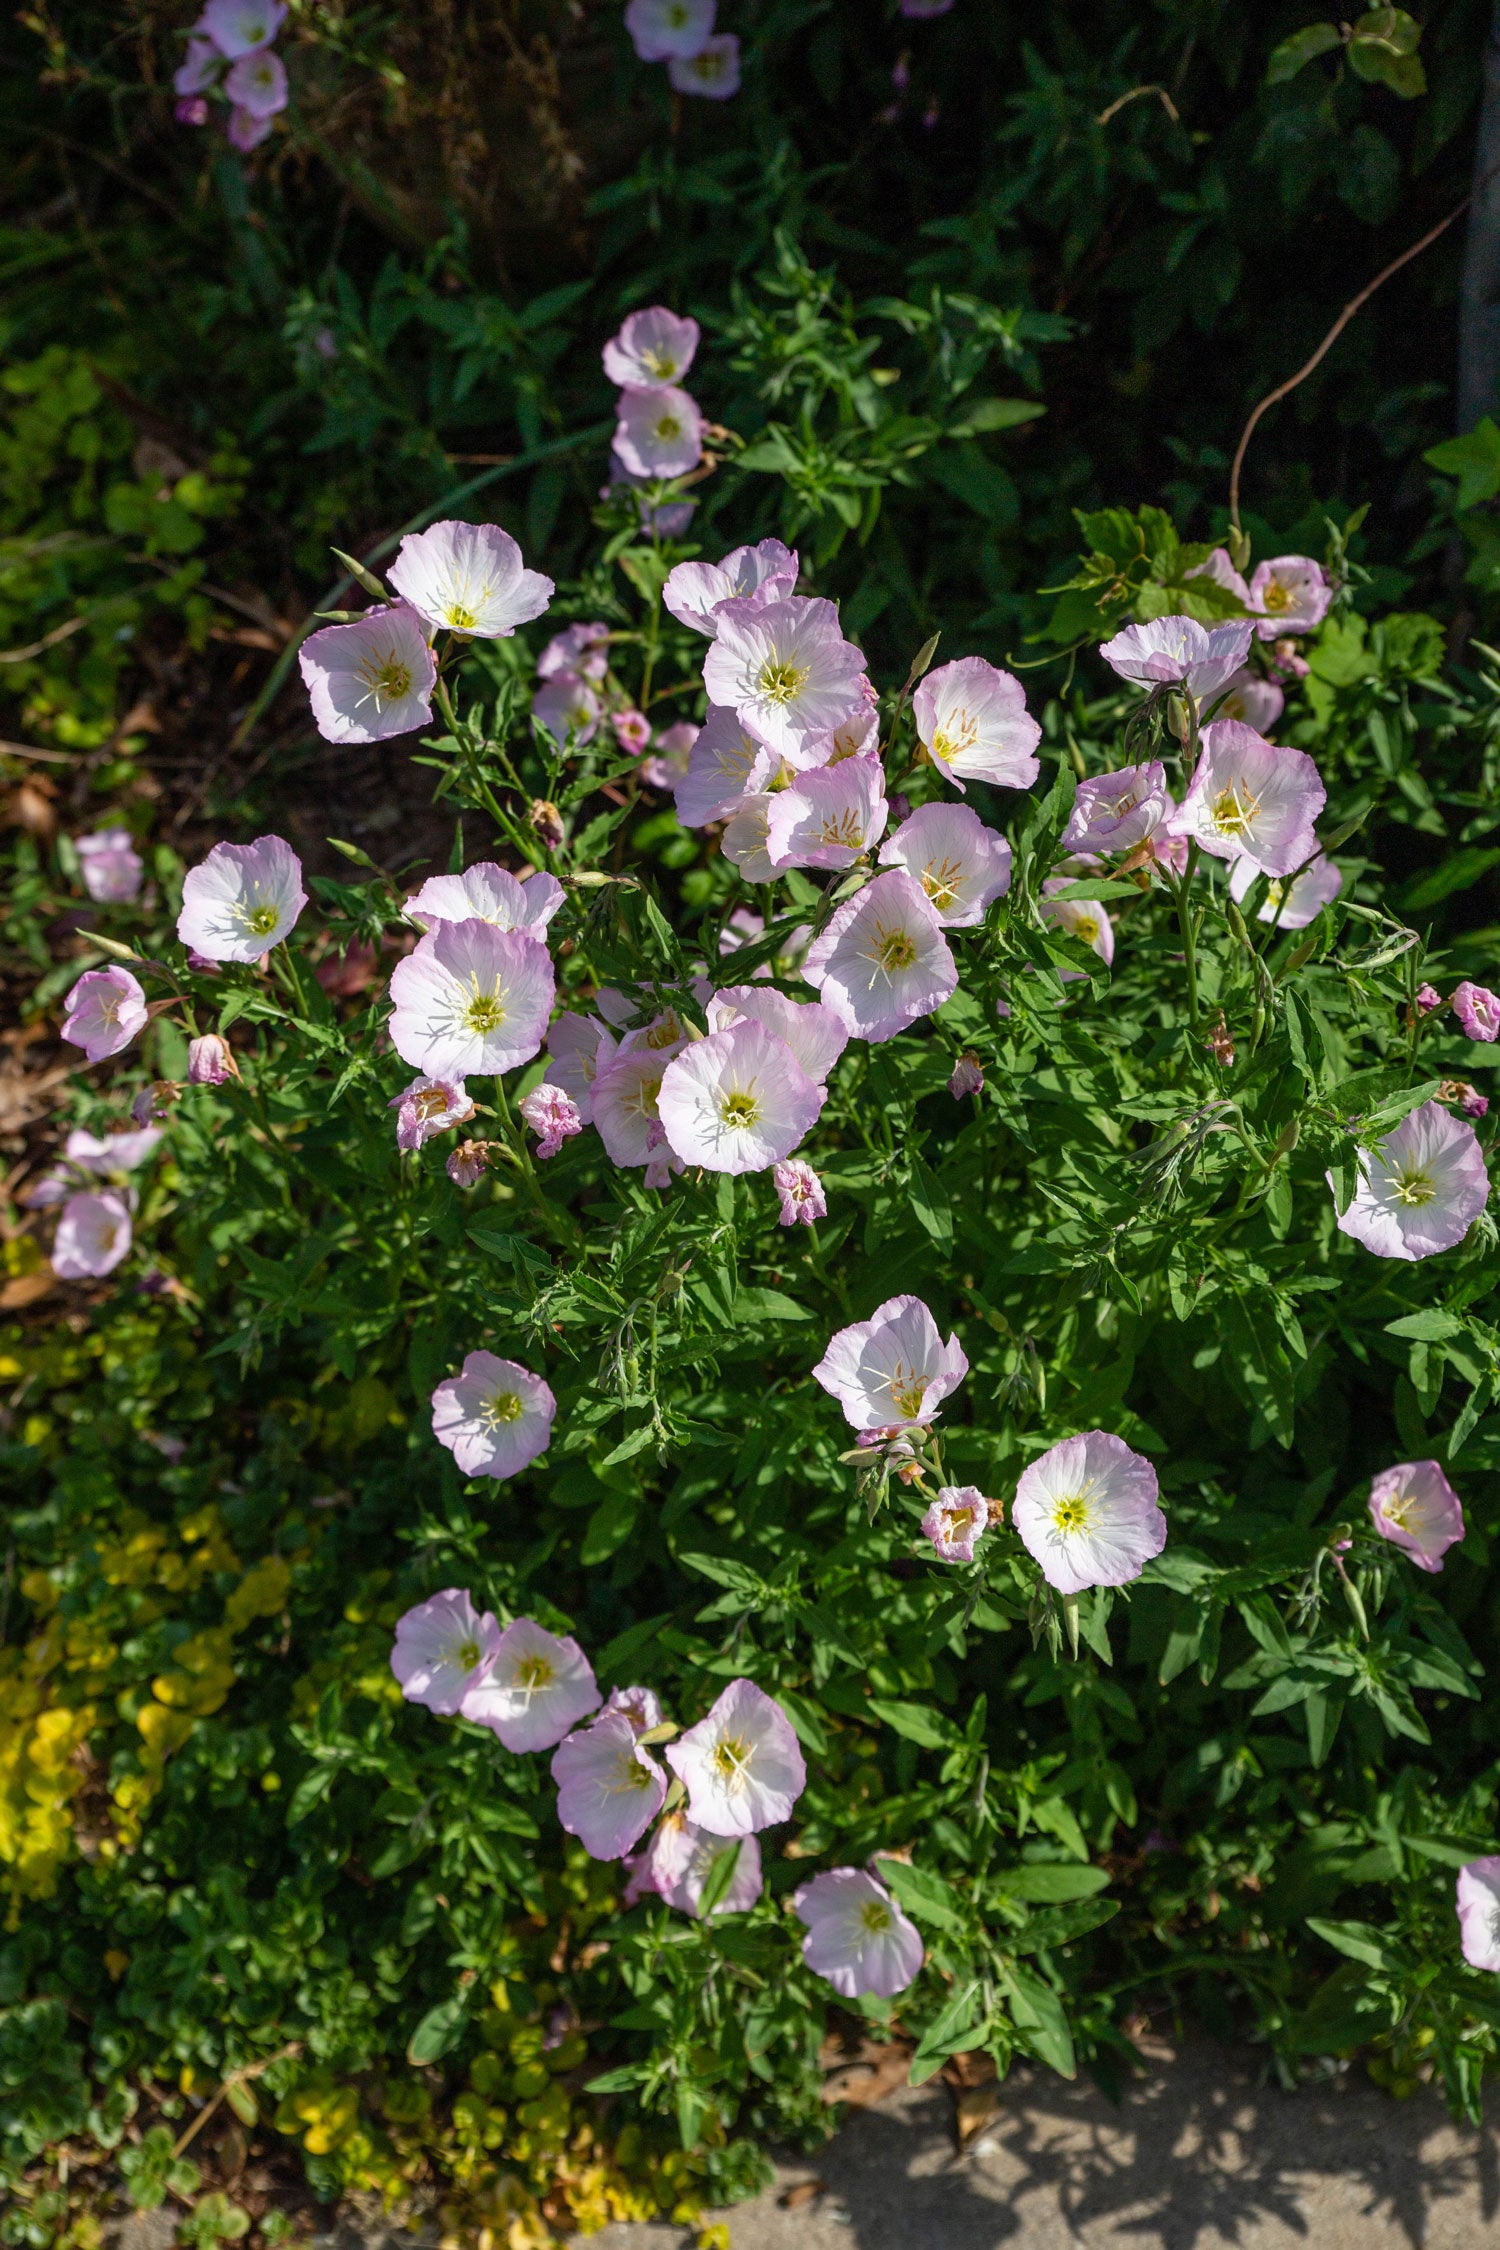 pink primrose gamechanger blend elixir LOTUSWEI flower essences